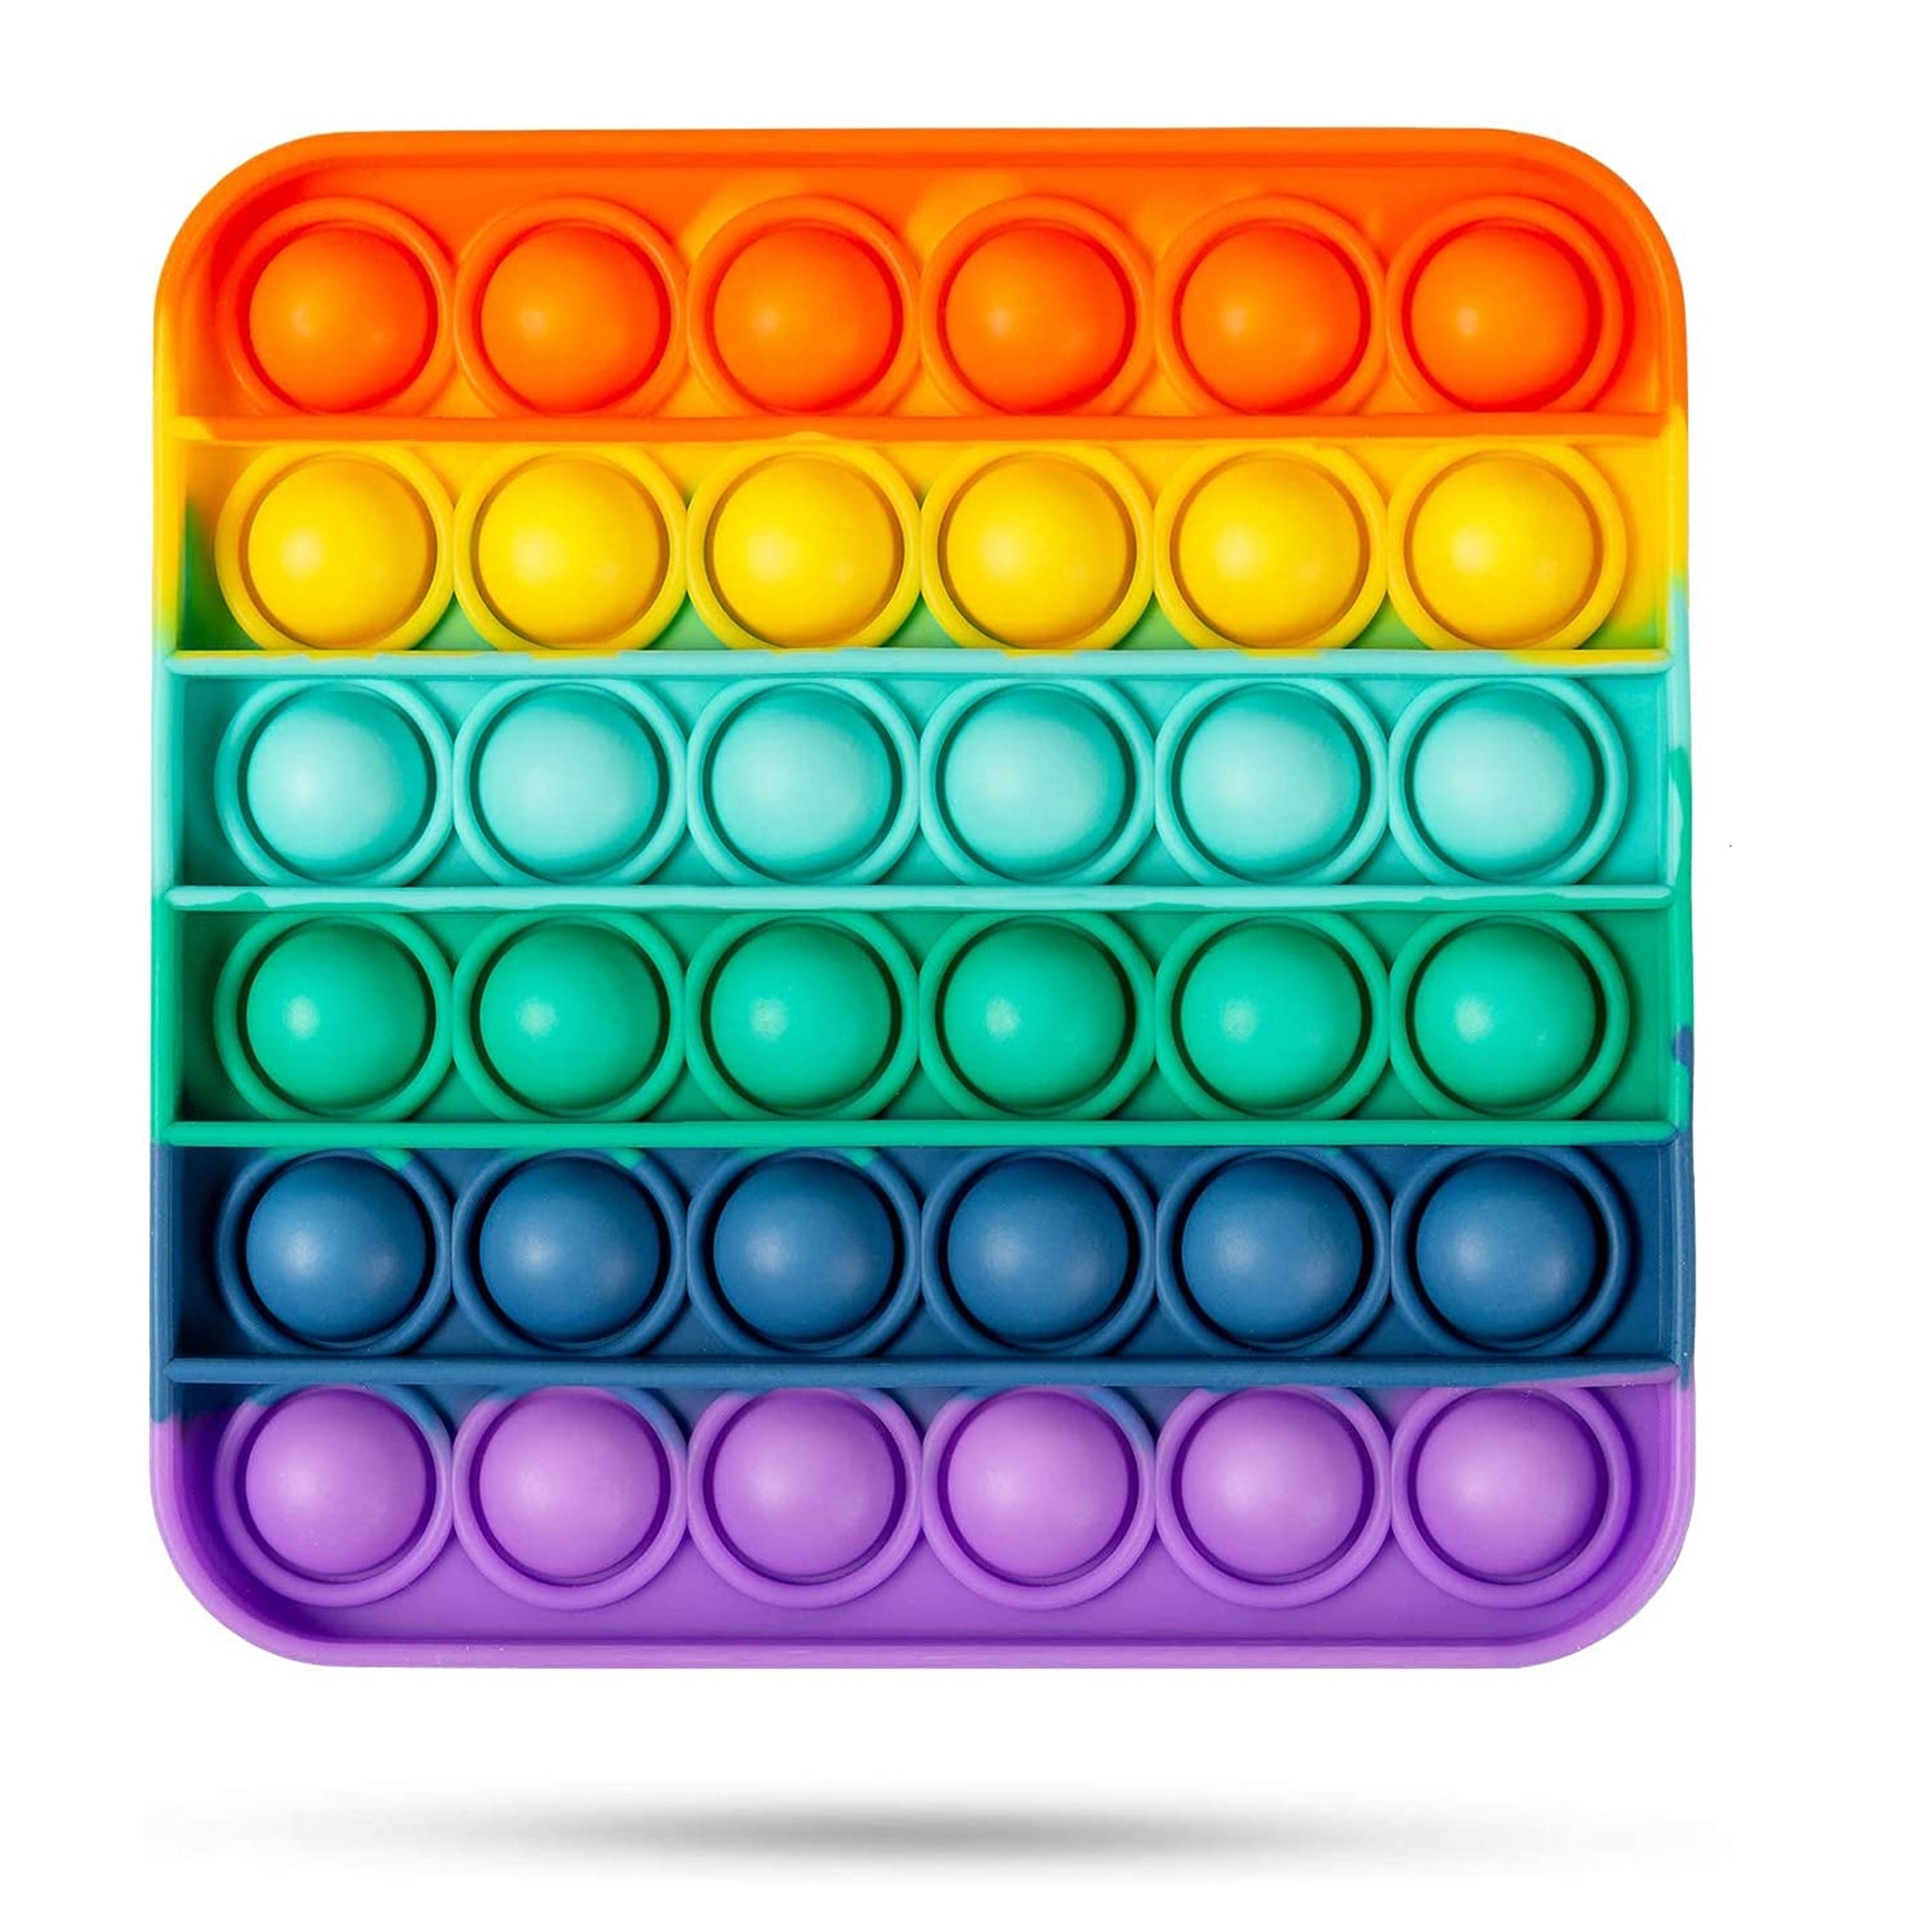 Rainbow Push Pop Bubble Fidget Toy - Sensory Stress Relief for All Ages